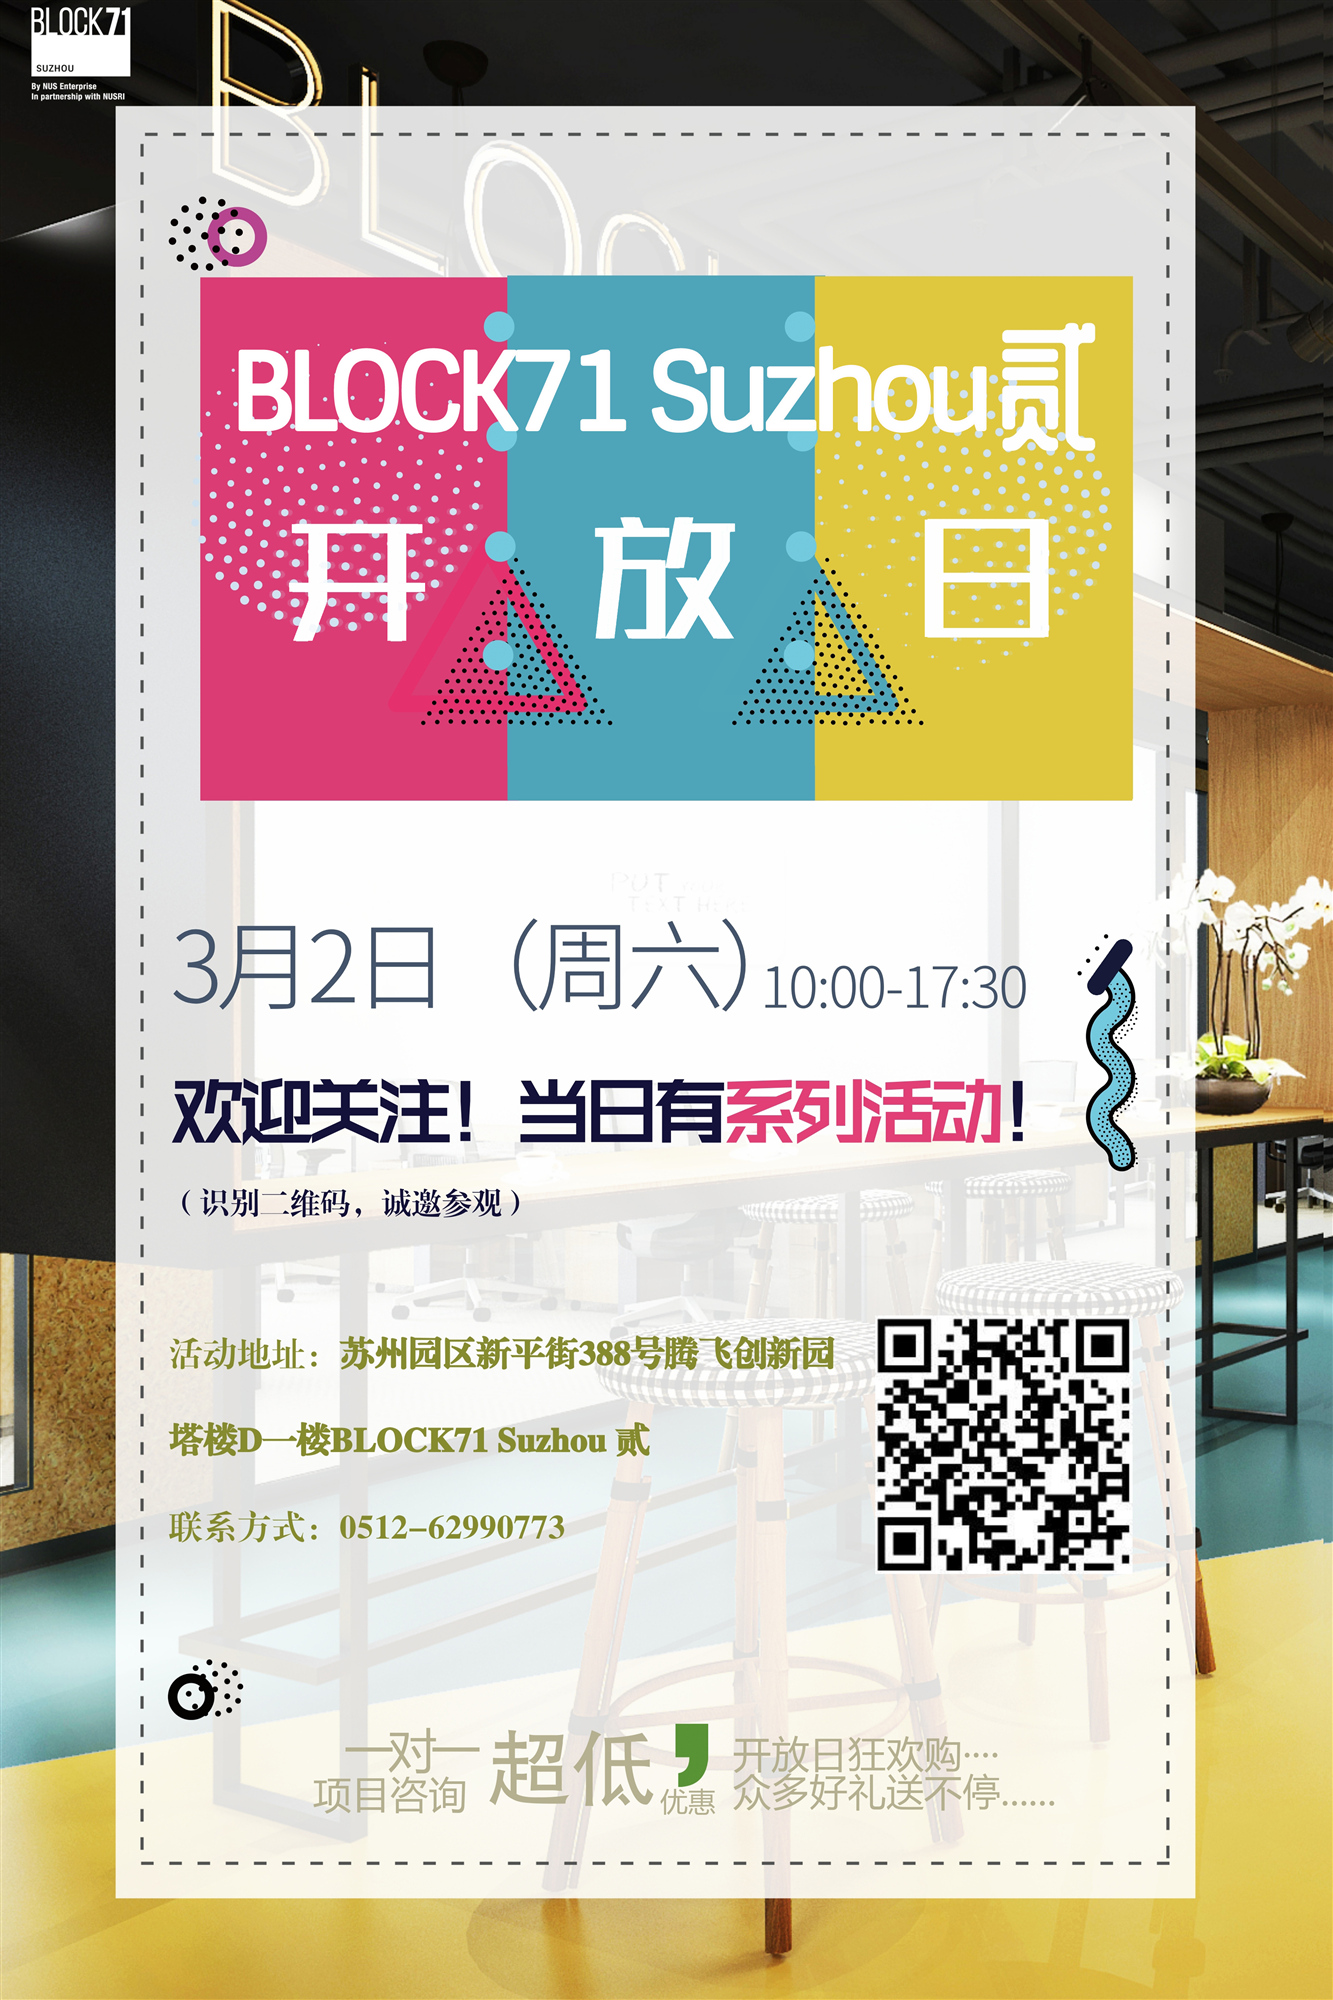 BLOCK71 Suzhou 贰 开放日